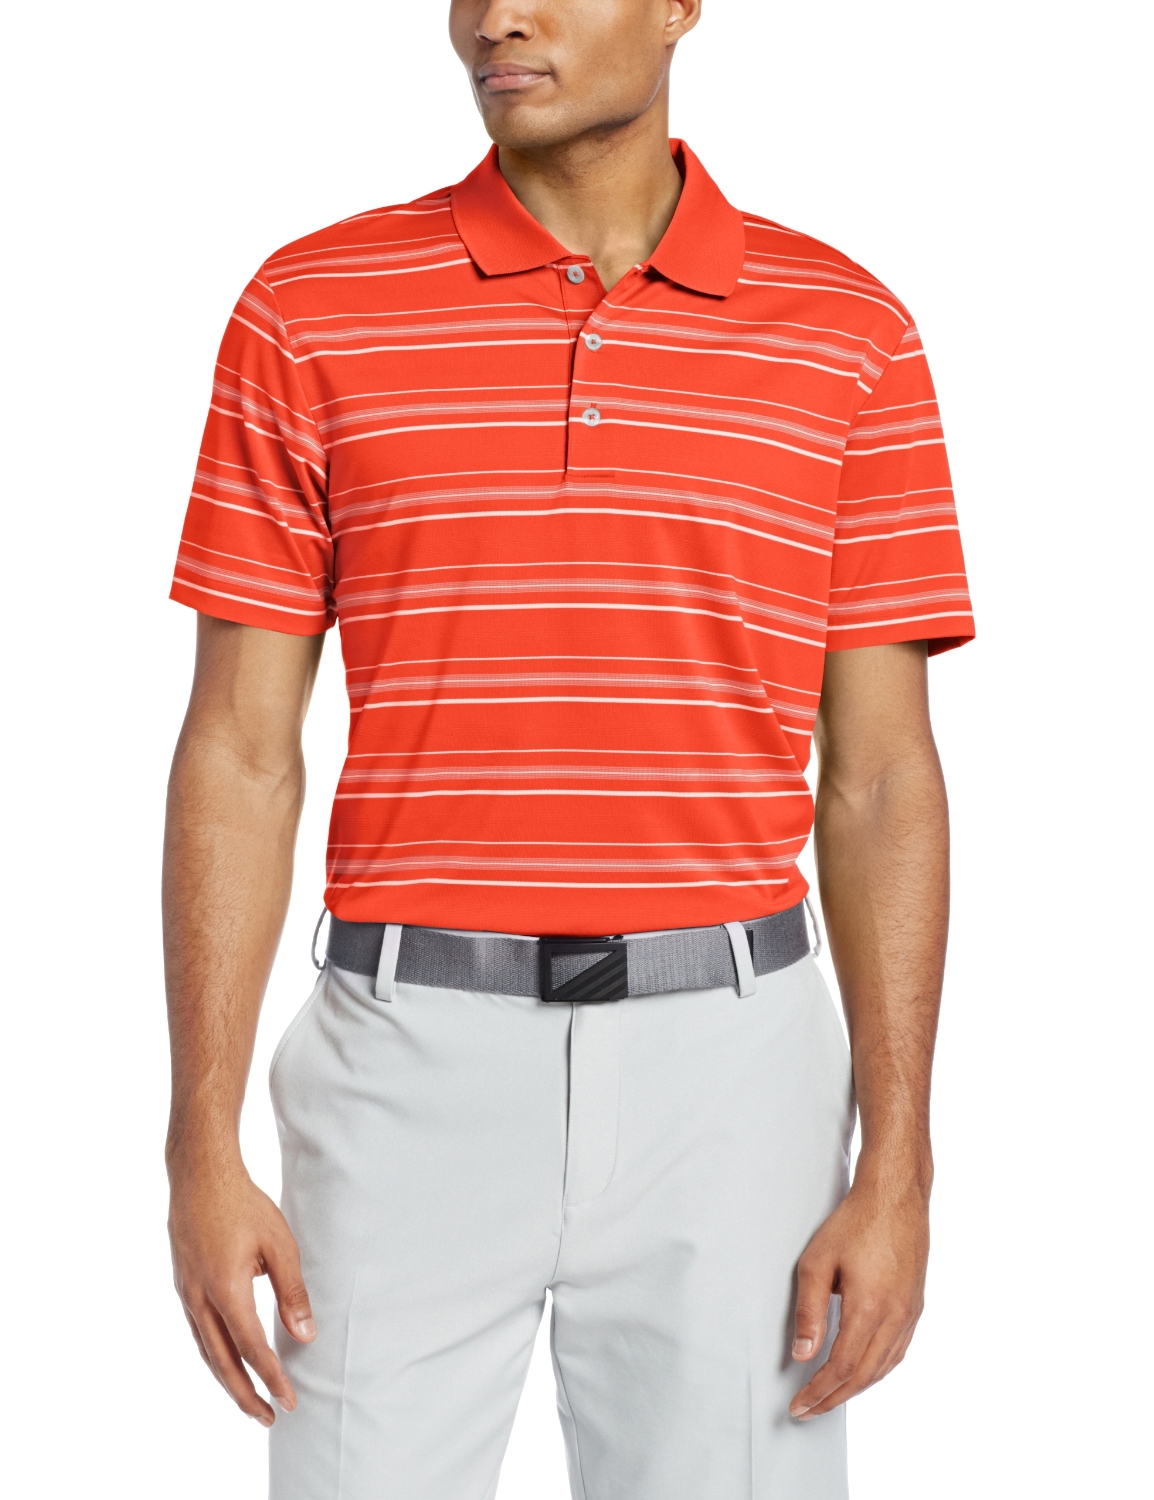 Adidas Mens Puremotion Textured Stripe Golf Polo Shirts